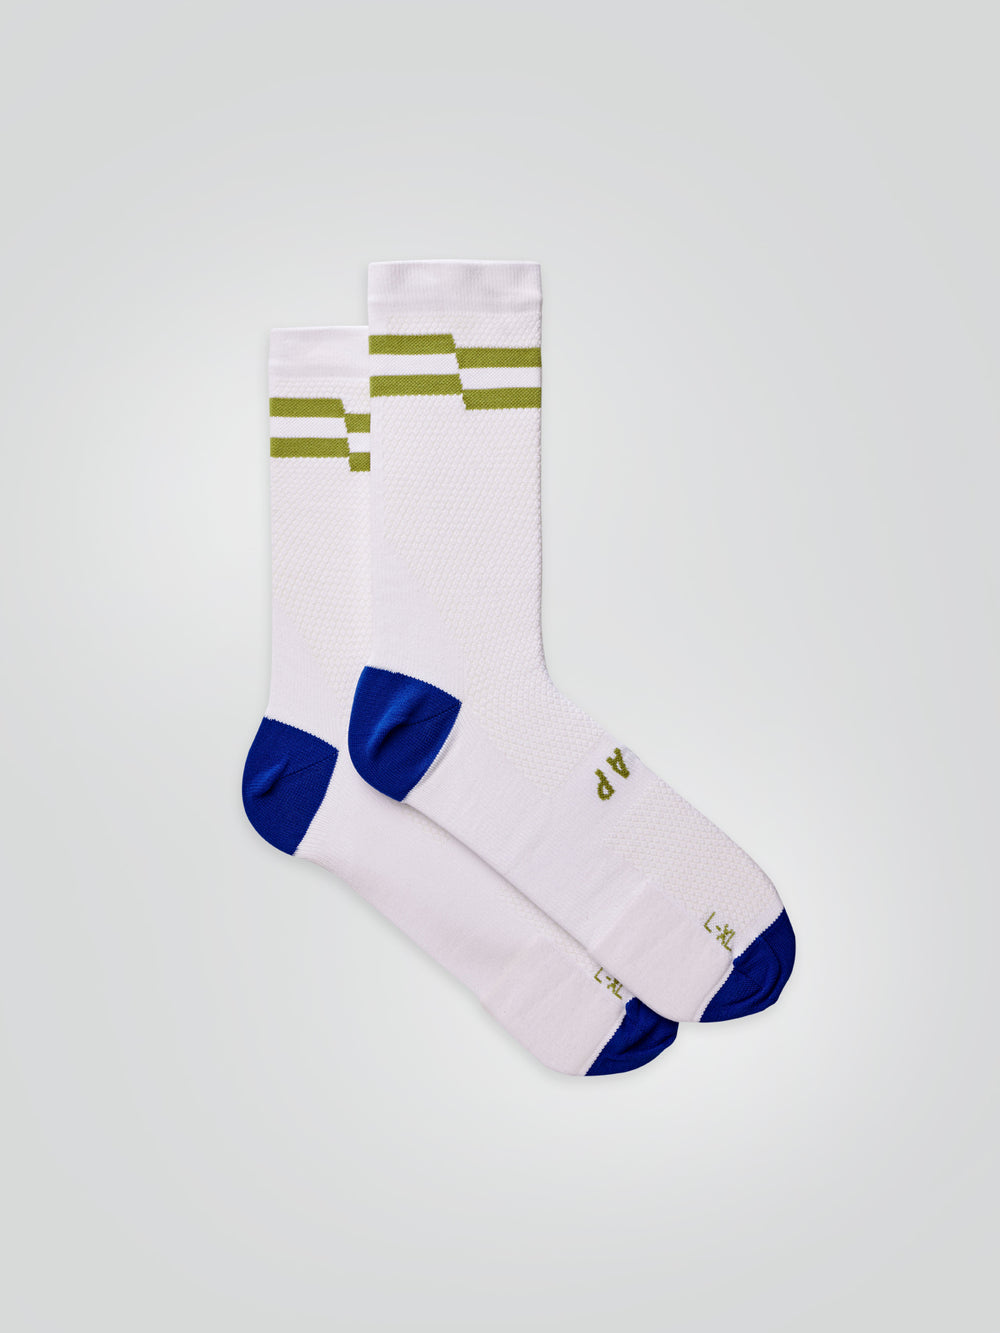 Product Image for Emblem Sock